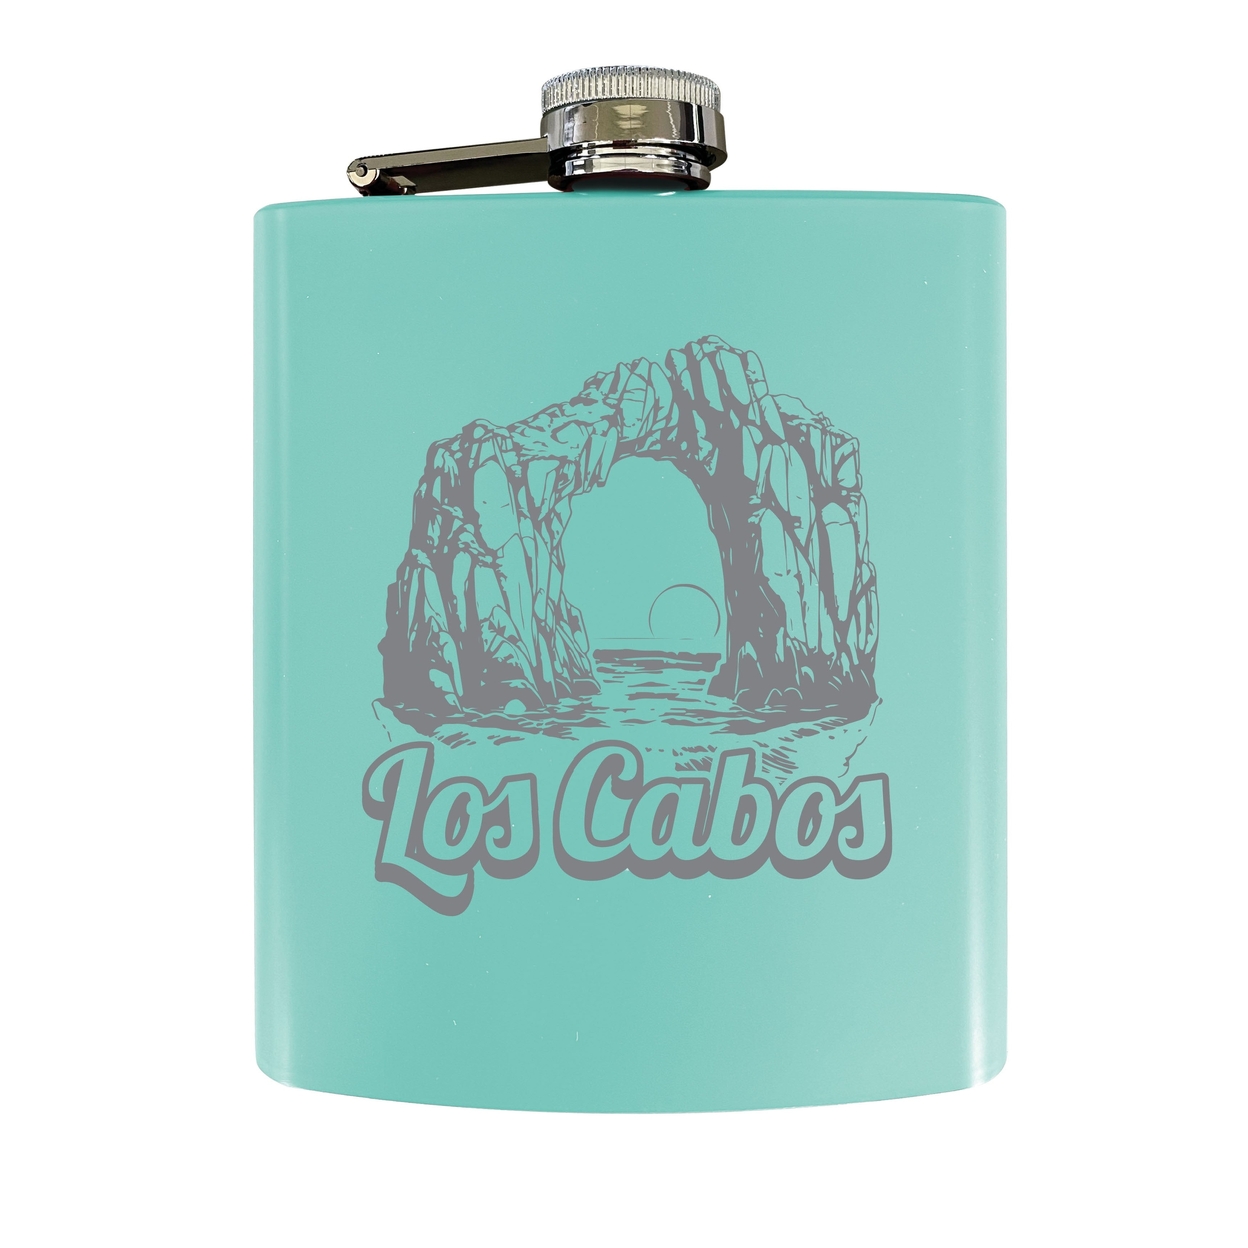 Los Cabos Mexico Souvenir 7 Oz Engraved Steel Flask Matte Finish - Black,,2-Pack